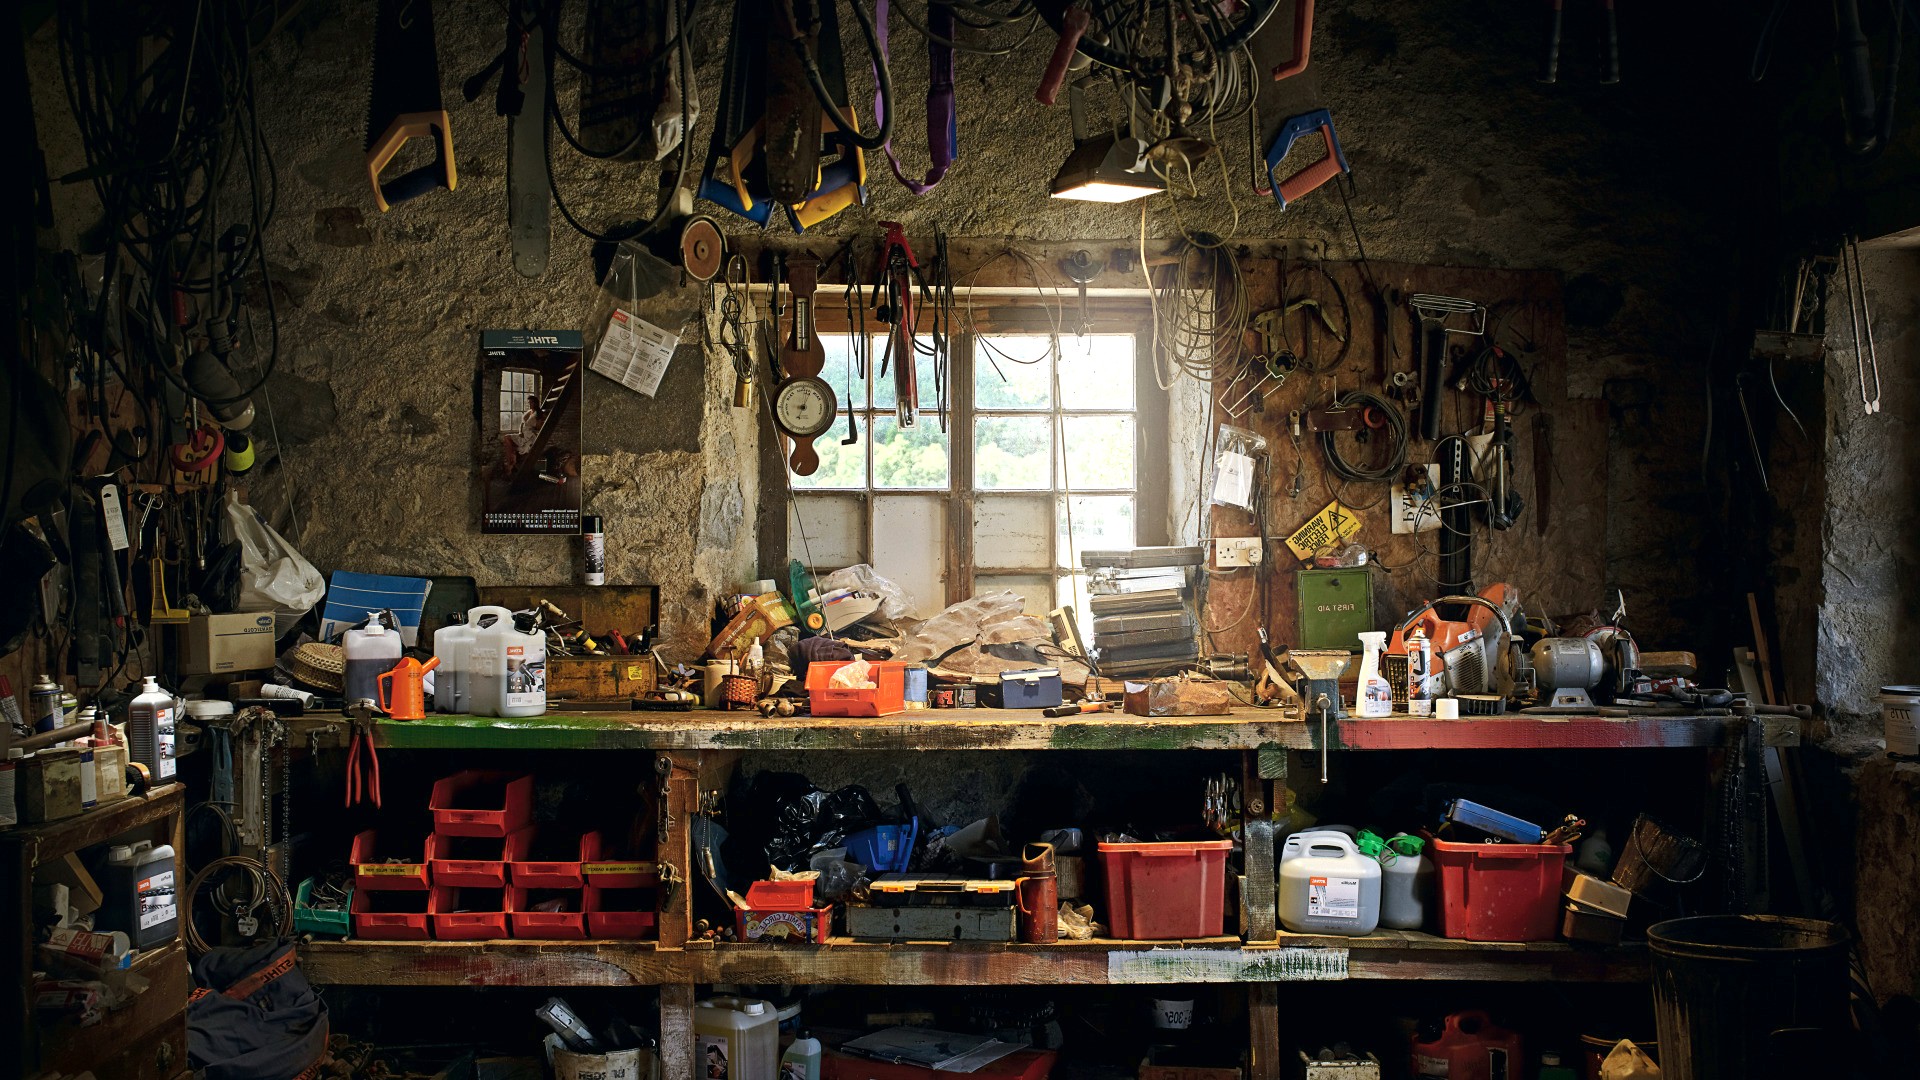 picture: tools, window, workshop, amazing photo (image)